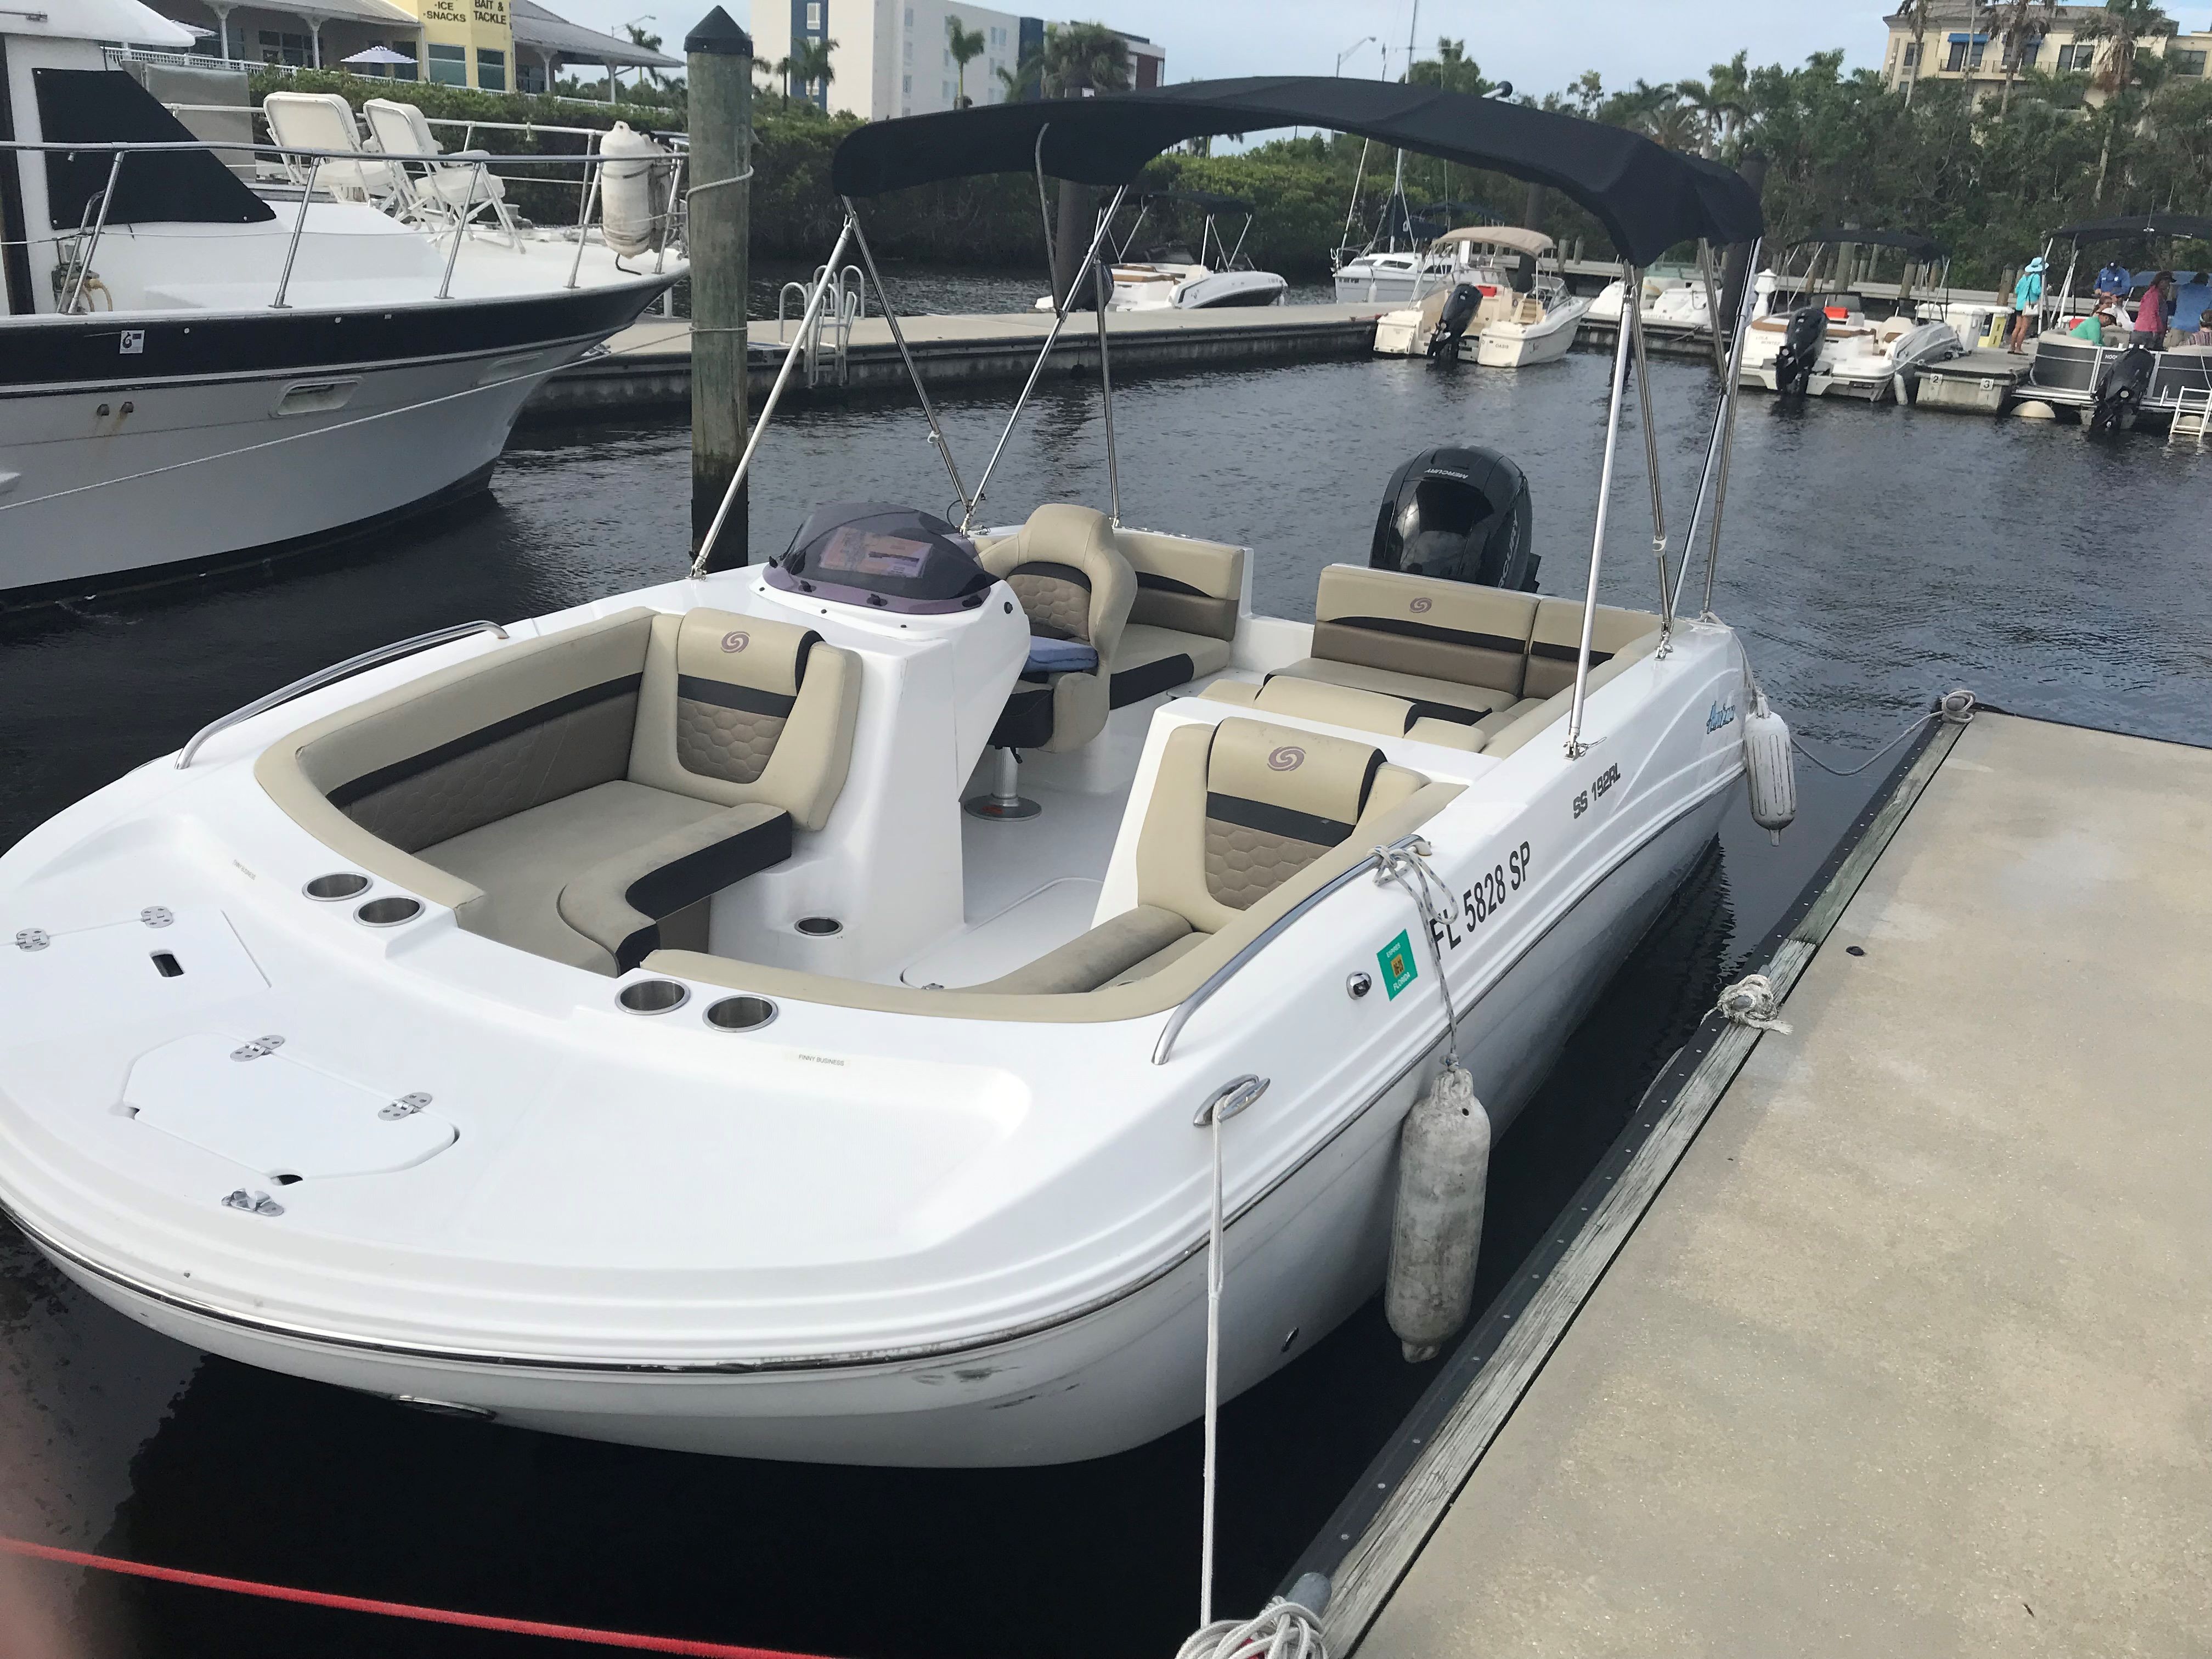 Finny Business (19' Deck Boat 150 HP - cruising)